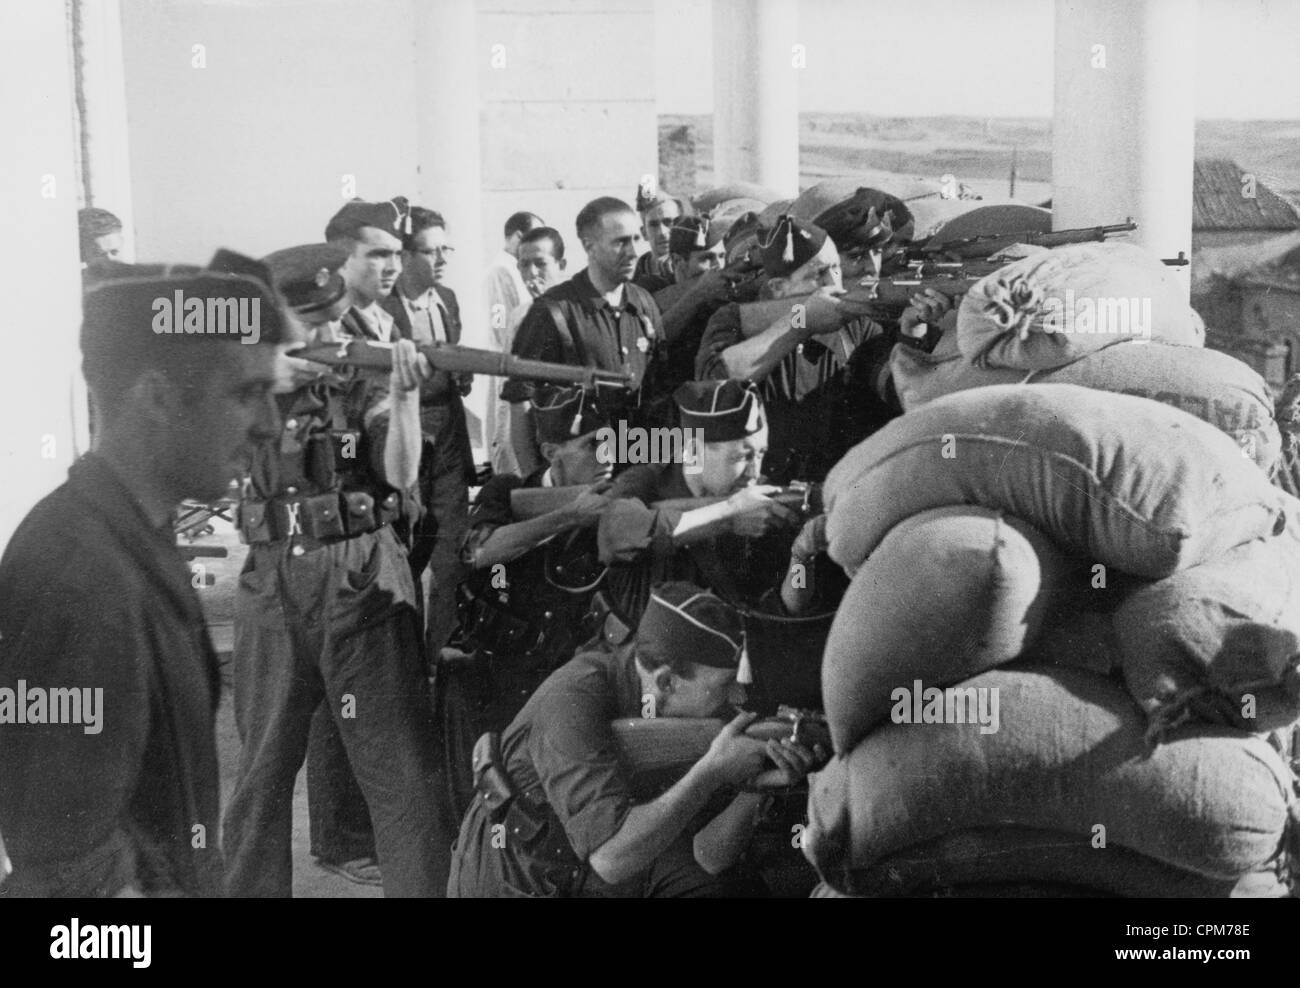 Republican soldiers in combat in Toledo, 1936 Stock Photo - Alamy